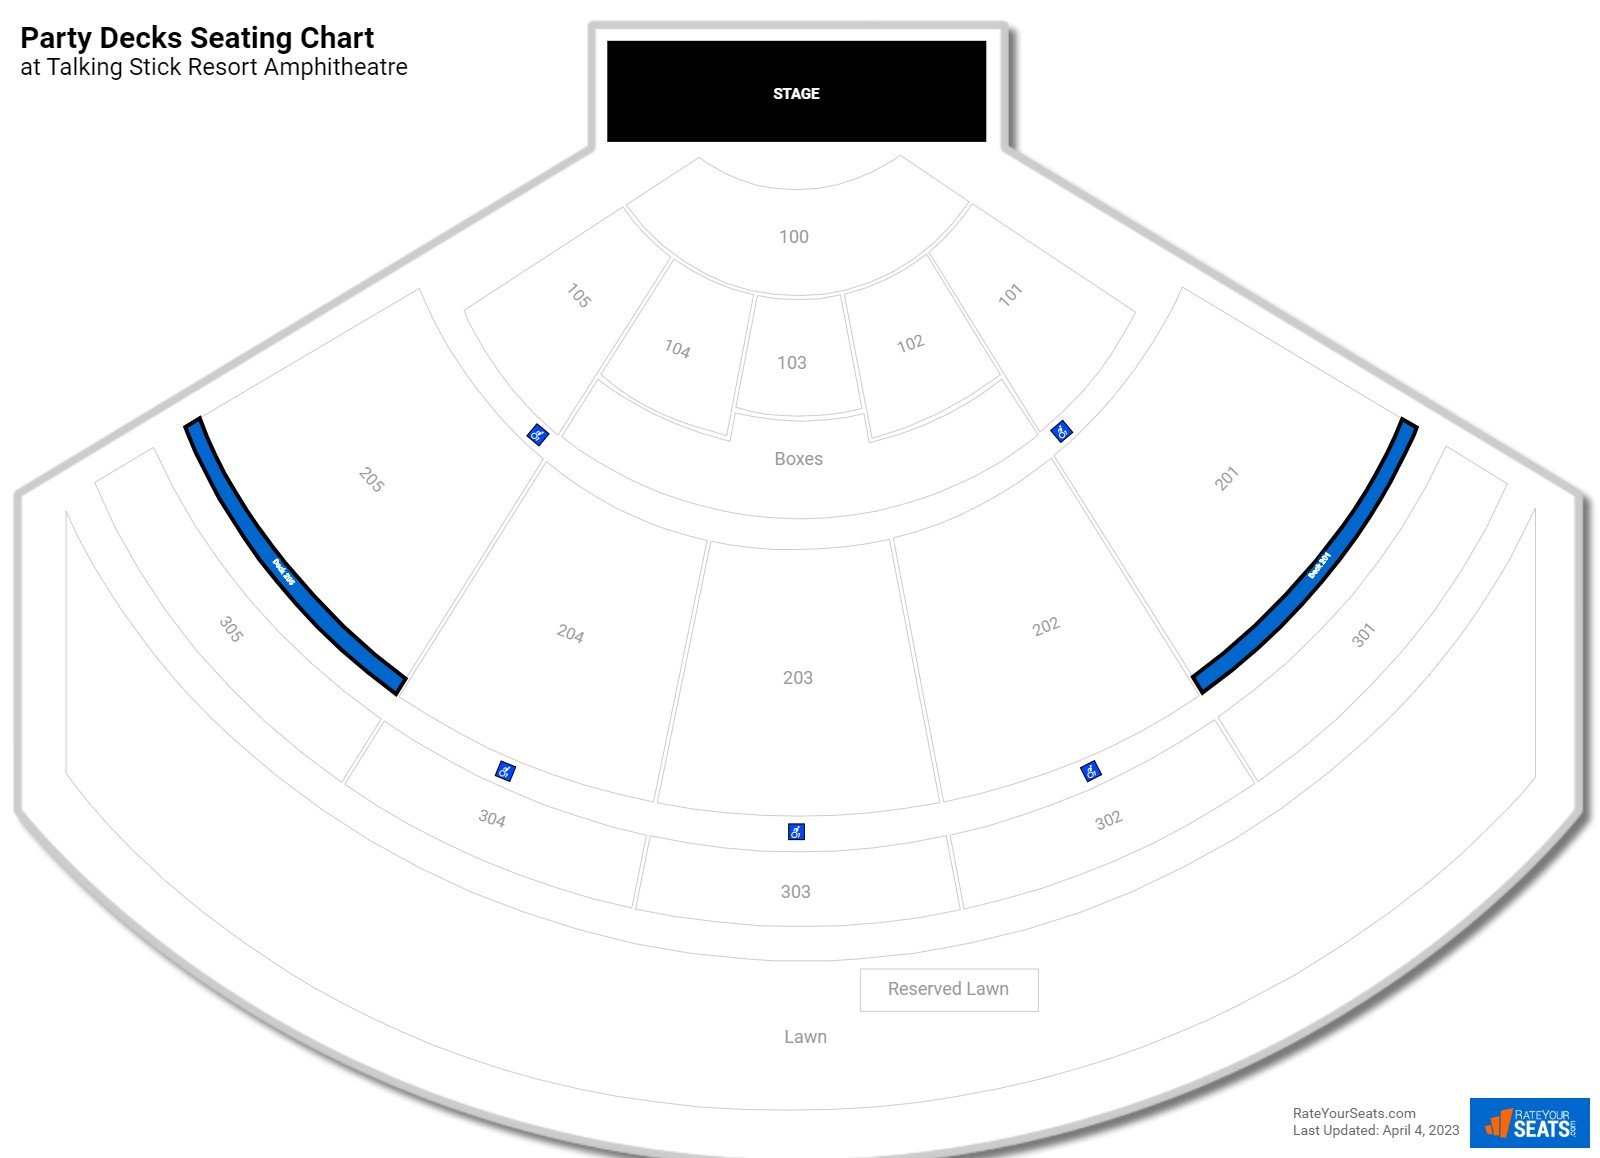 Concert Party Decks Seating Chart at Talking Stick Resort Amphitheatre